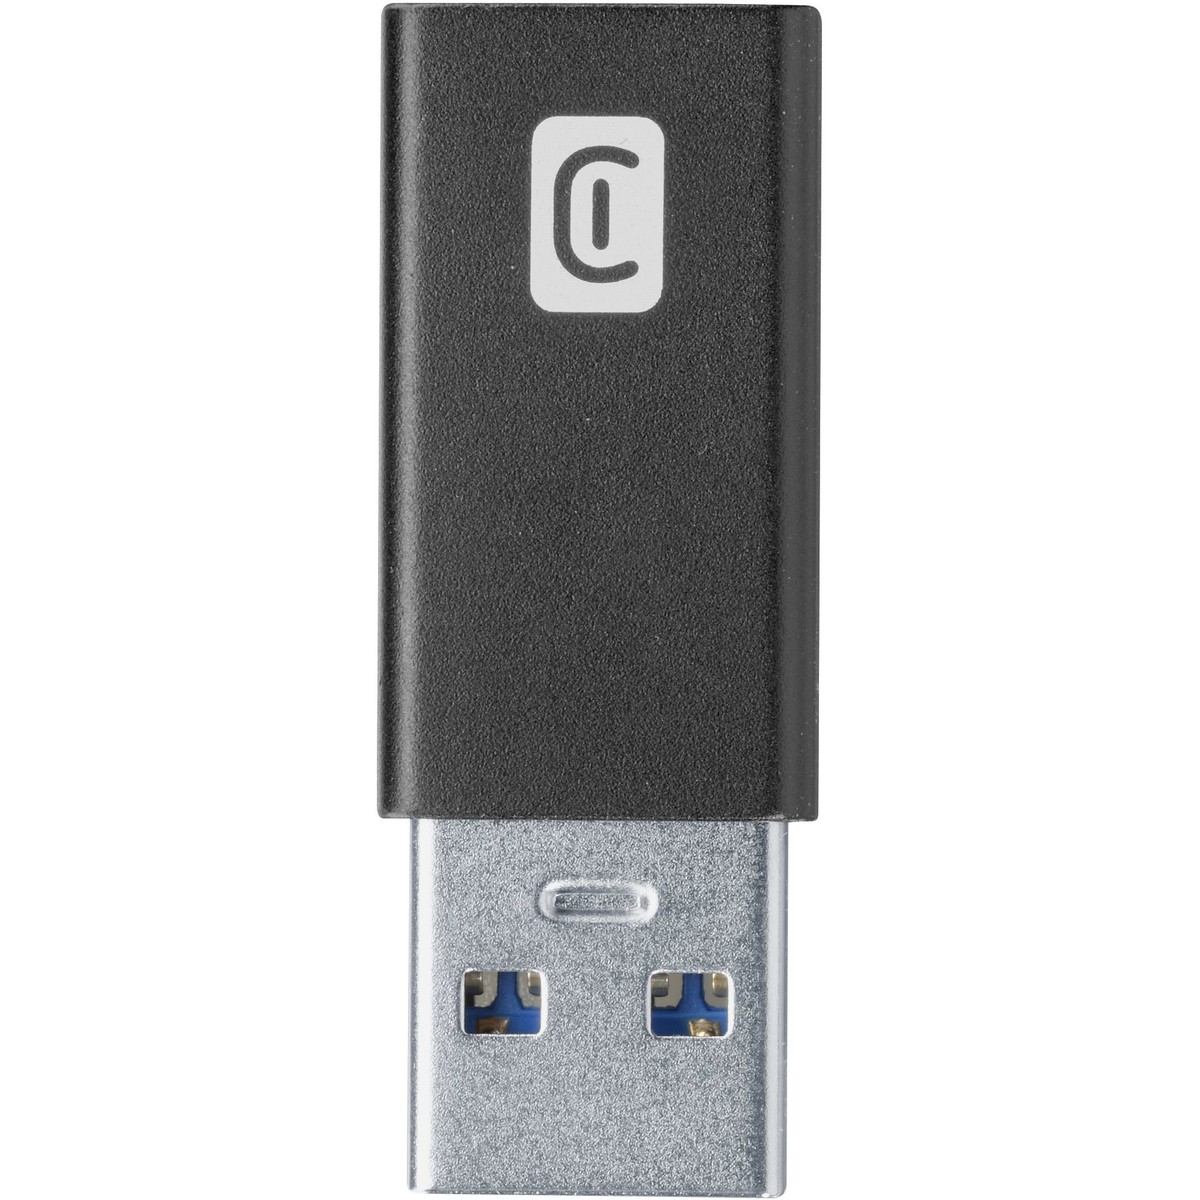 Adapter CAR USB Type-C auf USB Type-A